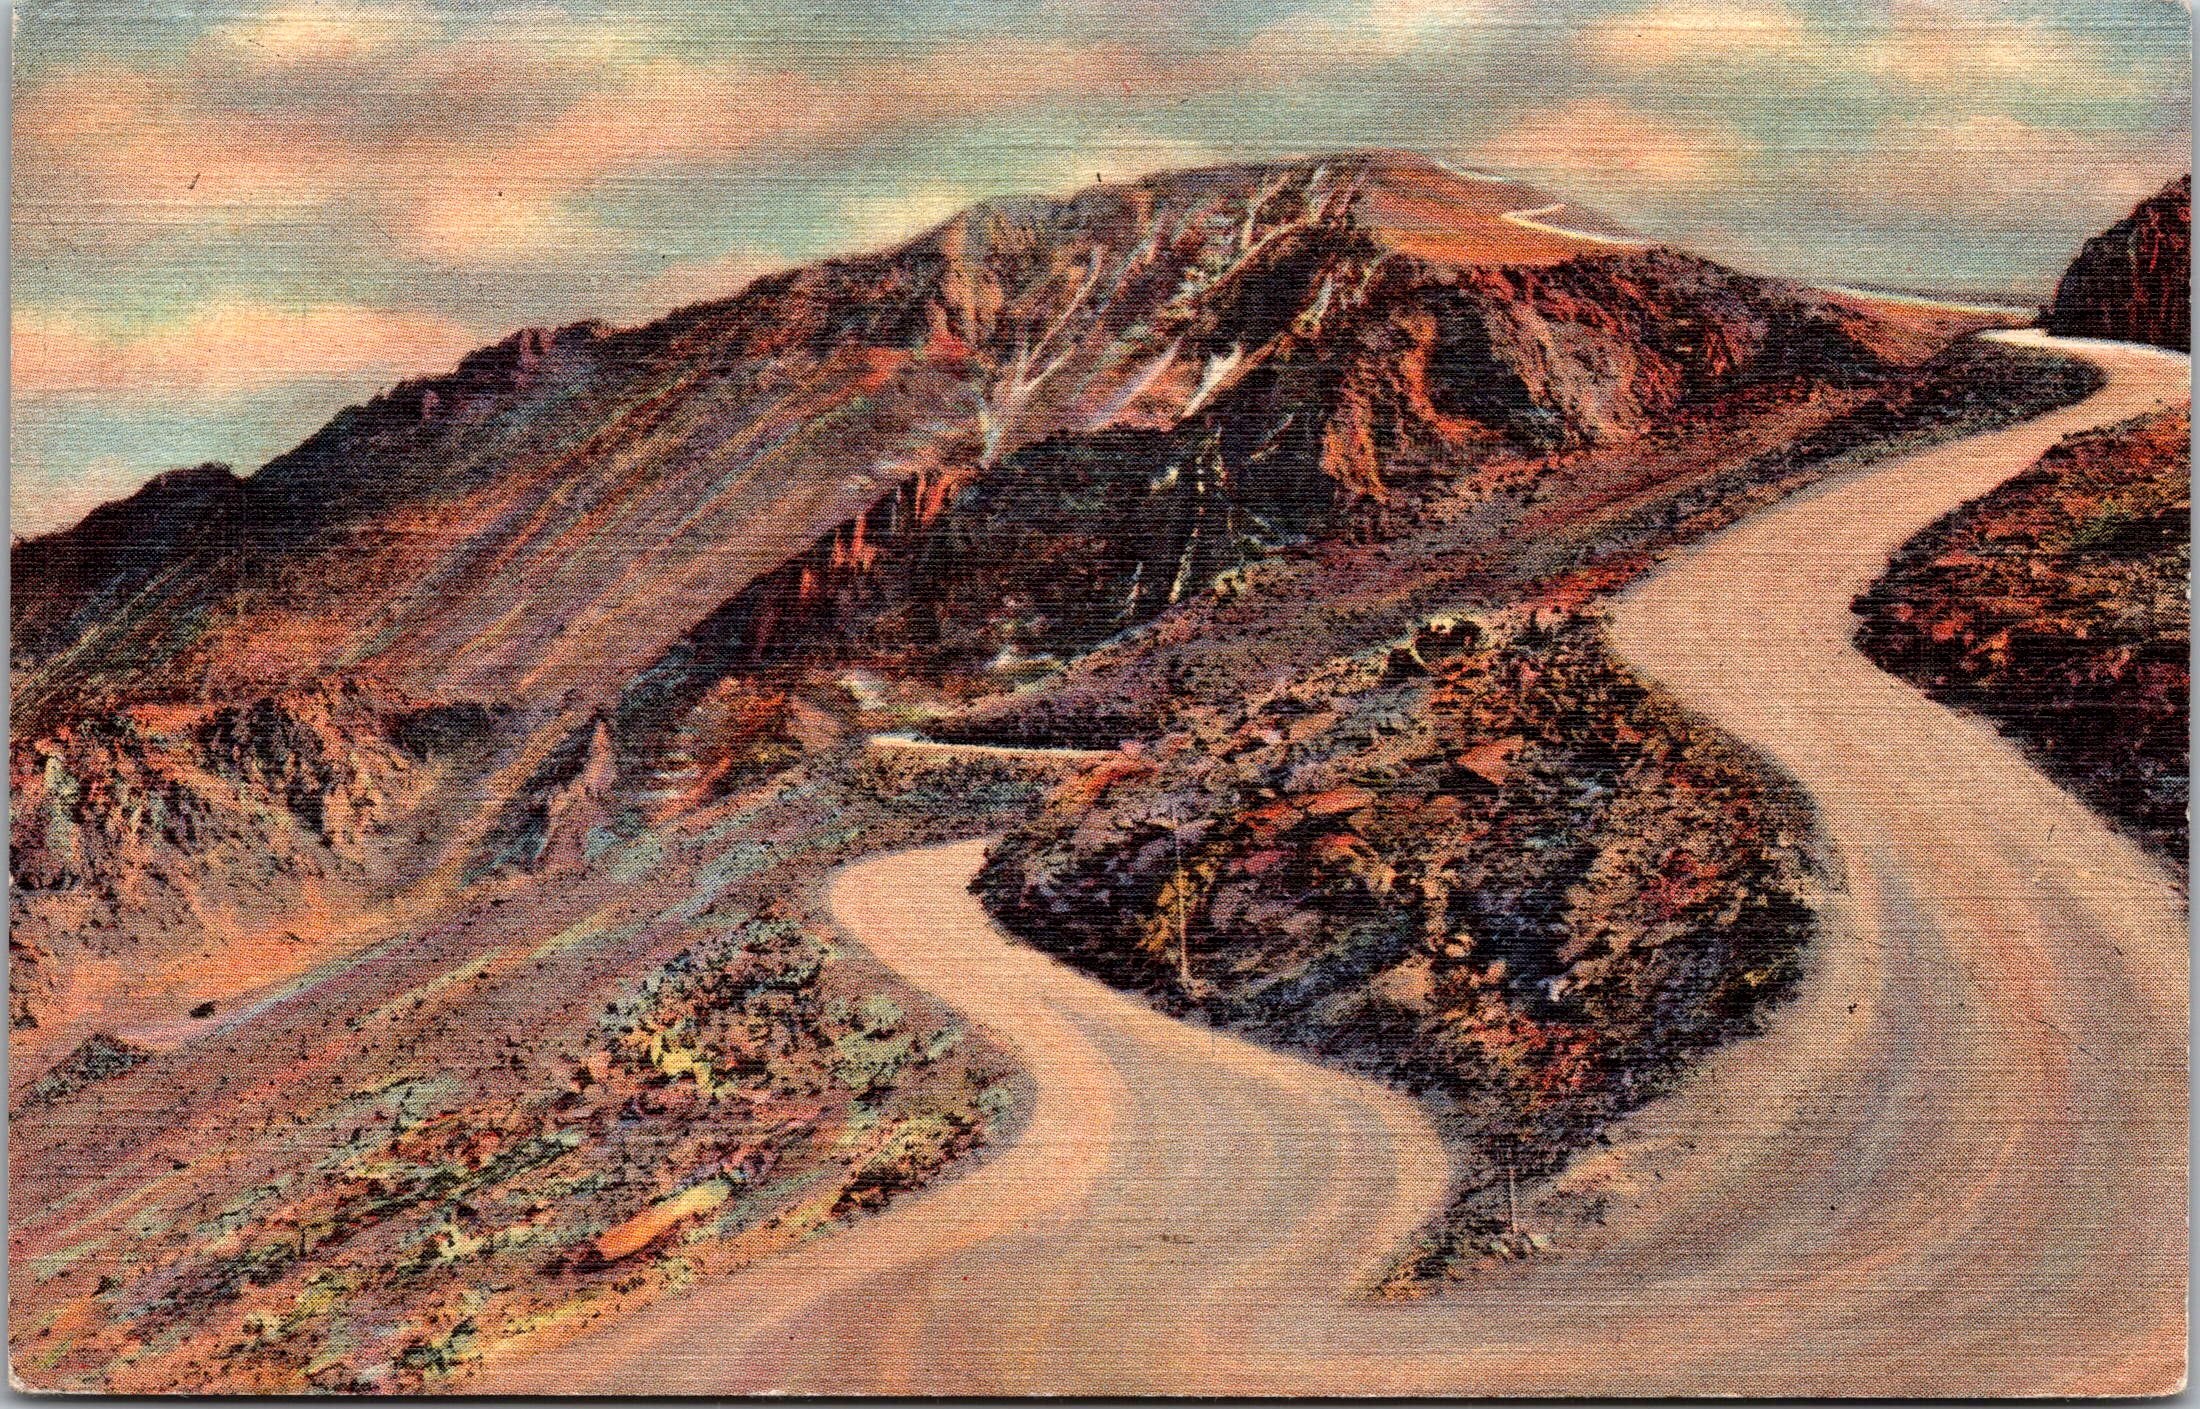 Top of Pikes Peak, 14,109 Feet Above The Sea, Vintage Post Card